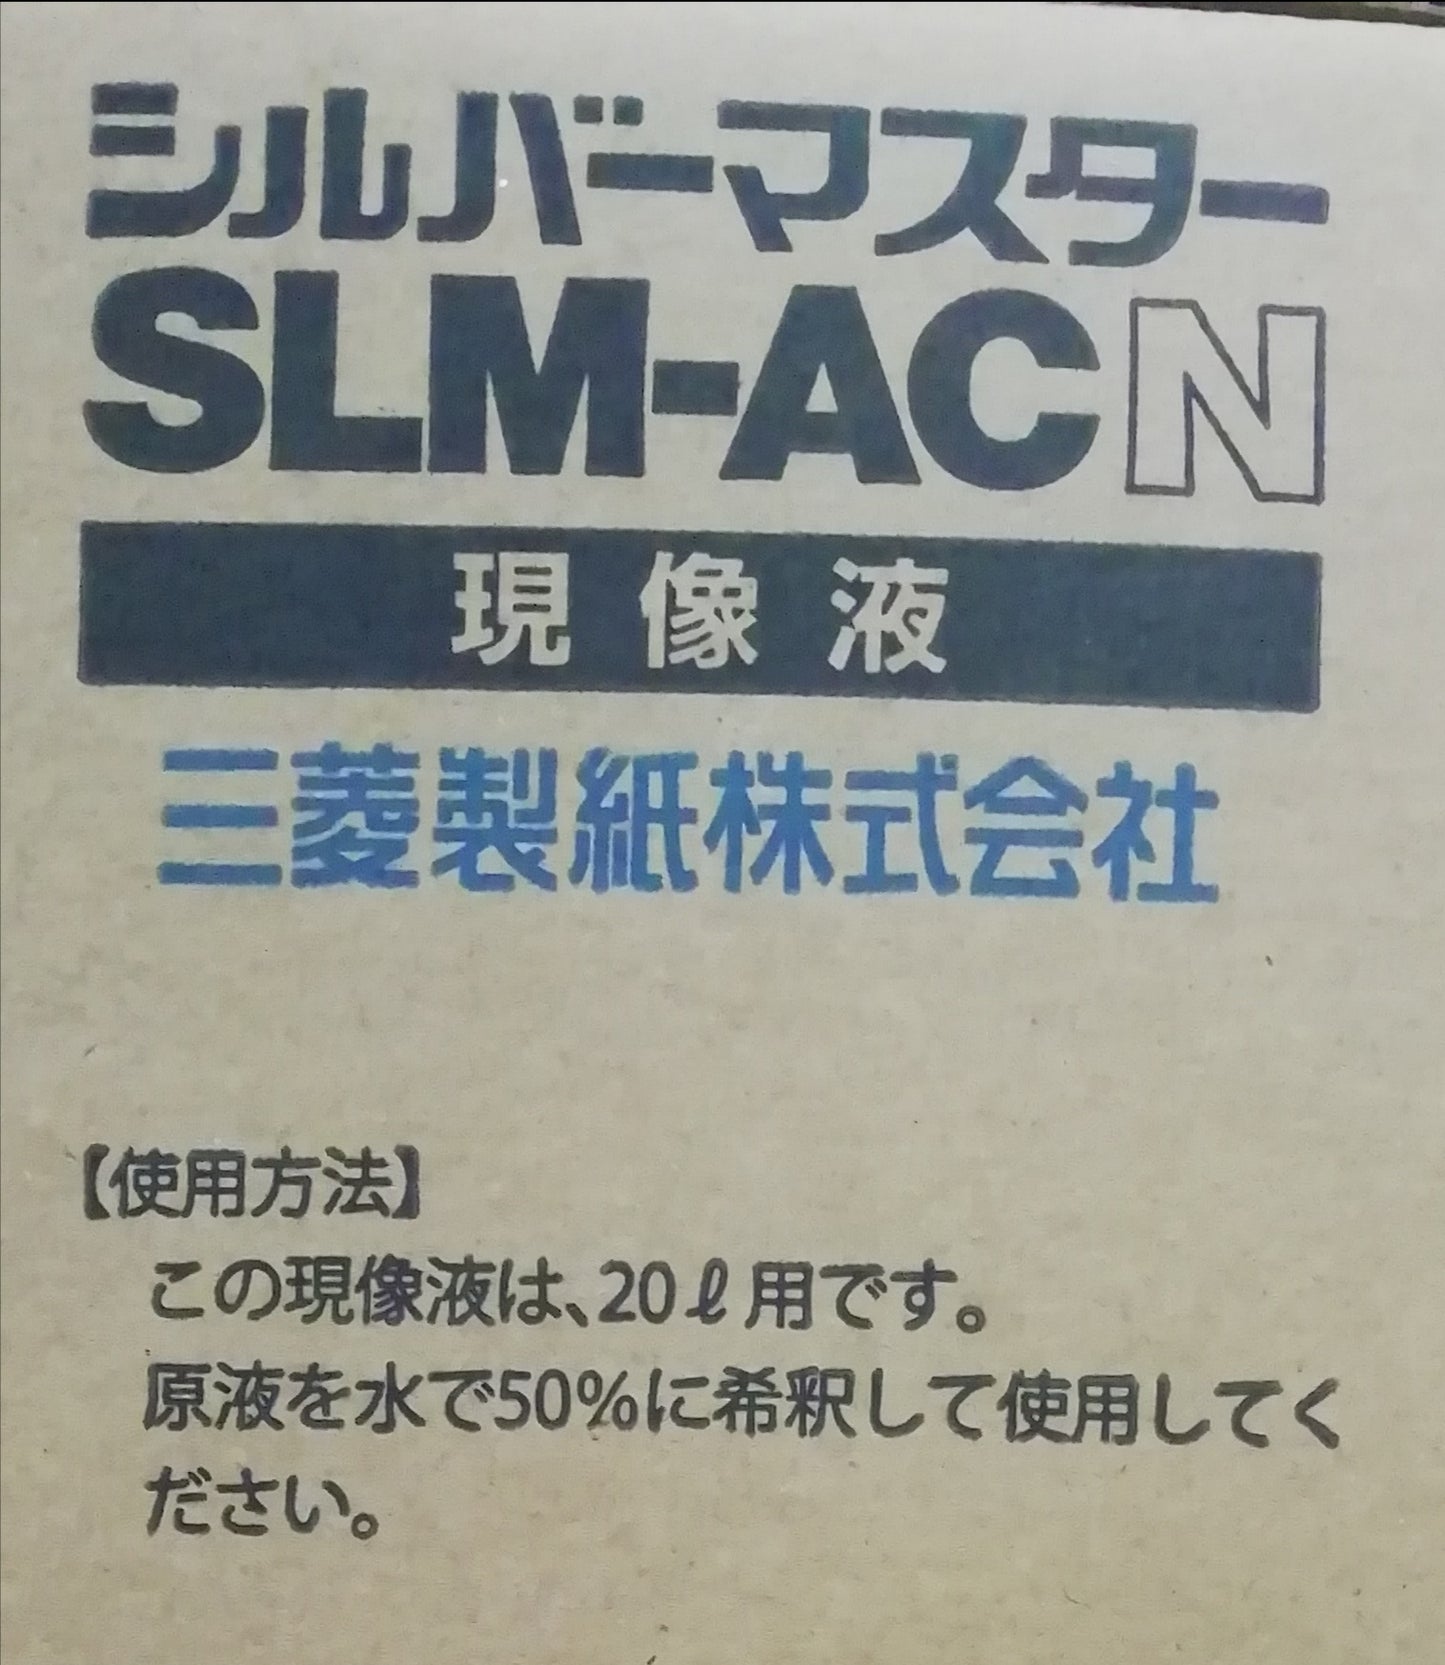 【新品】三菱製紙 製版用処理液(現像液) SLM-ACN mitsubishiseishi1-slmacn-4007